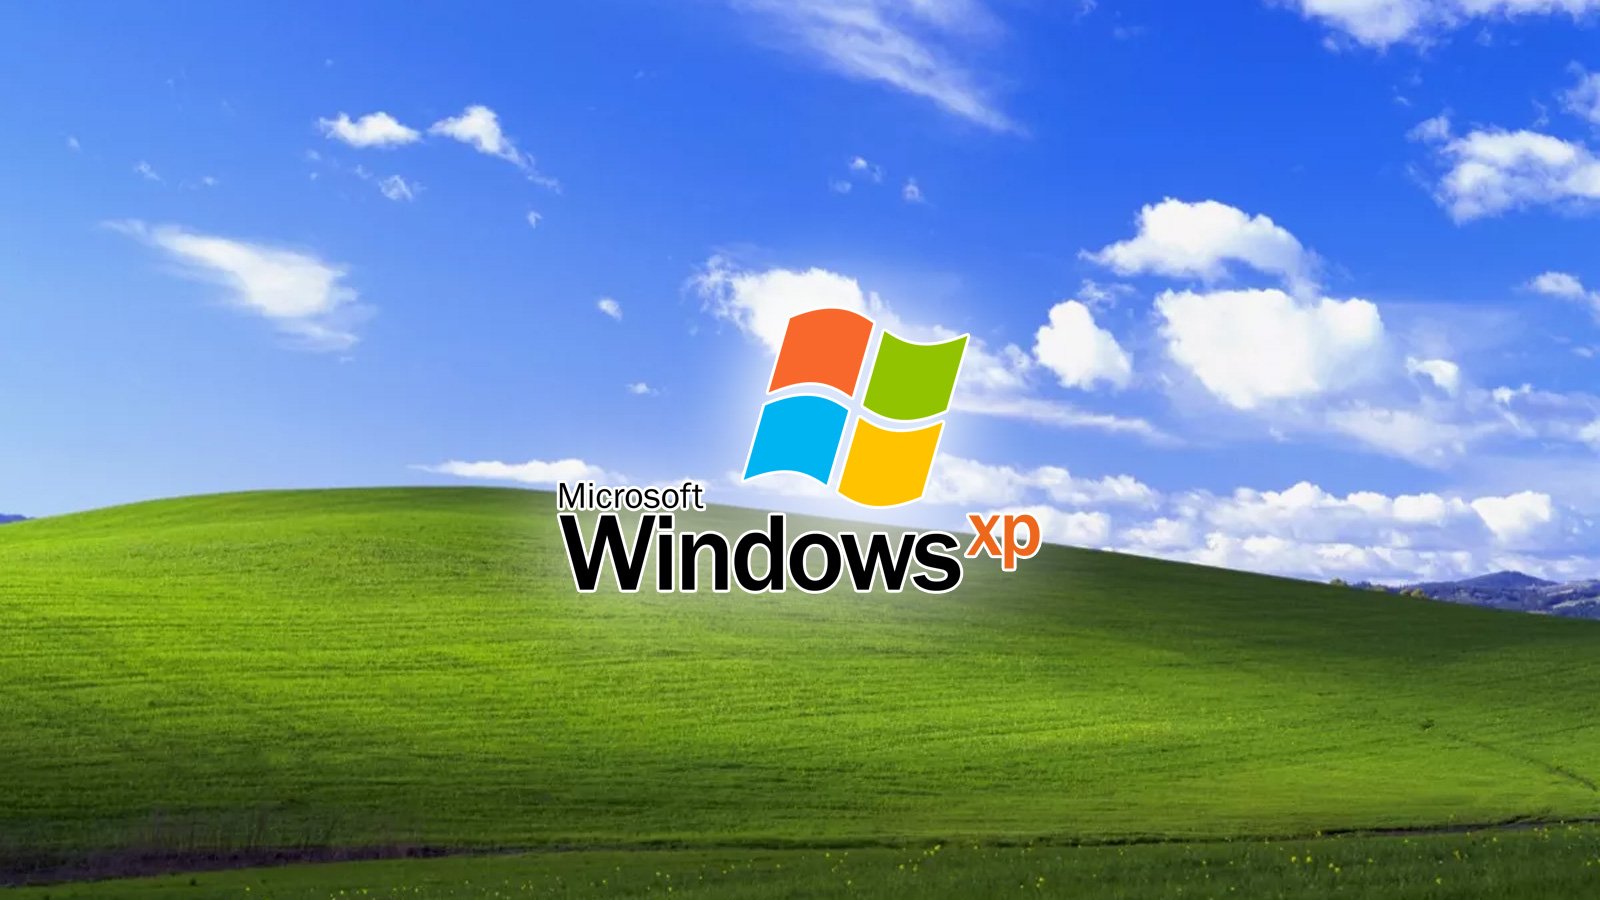 It's Windows XP's 20th birthday and way too many still use it